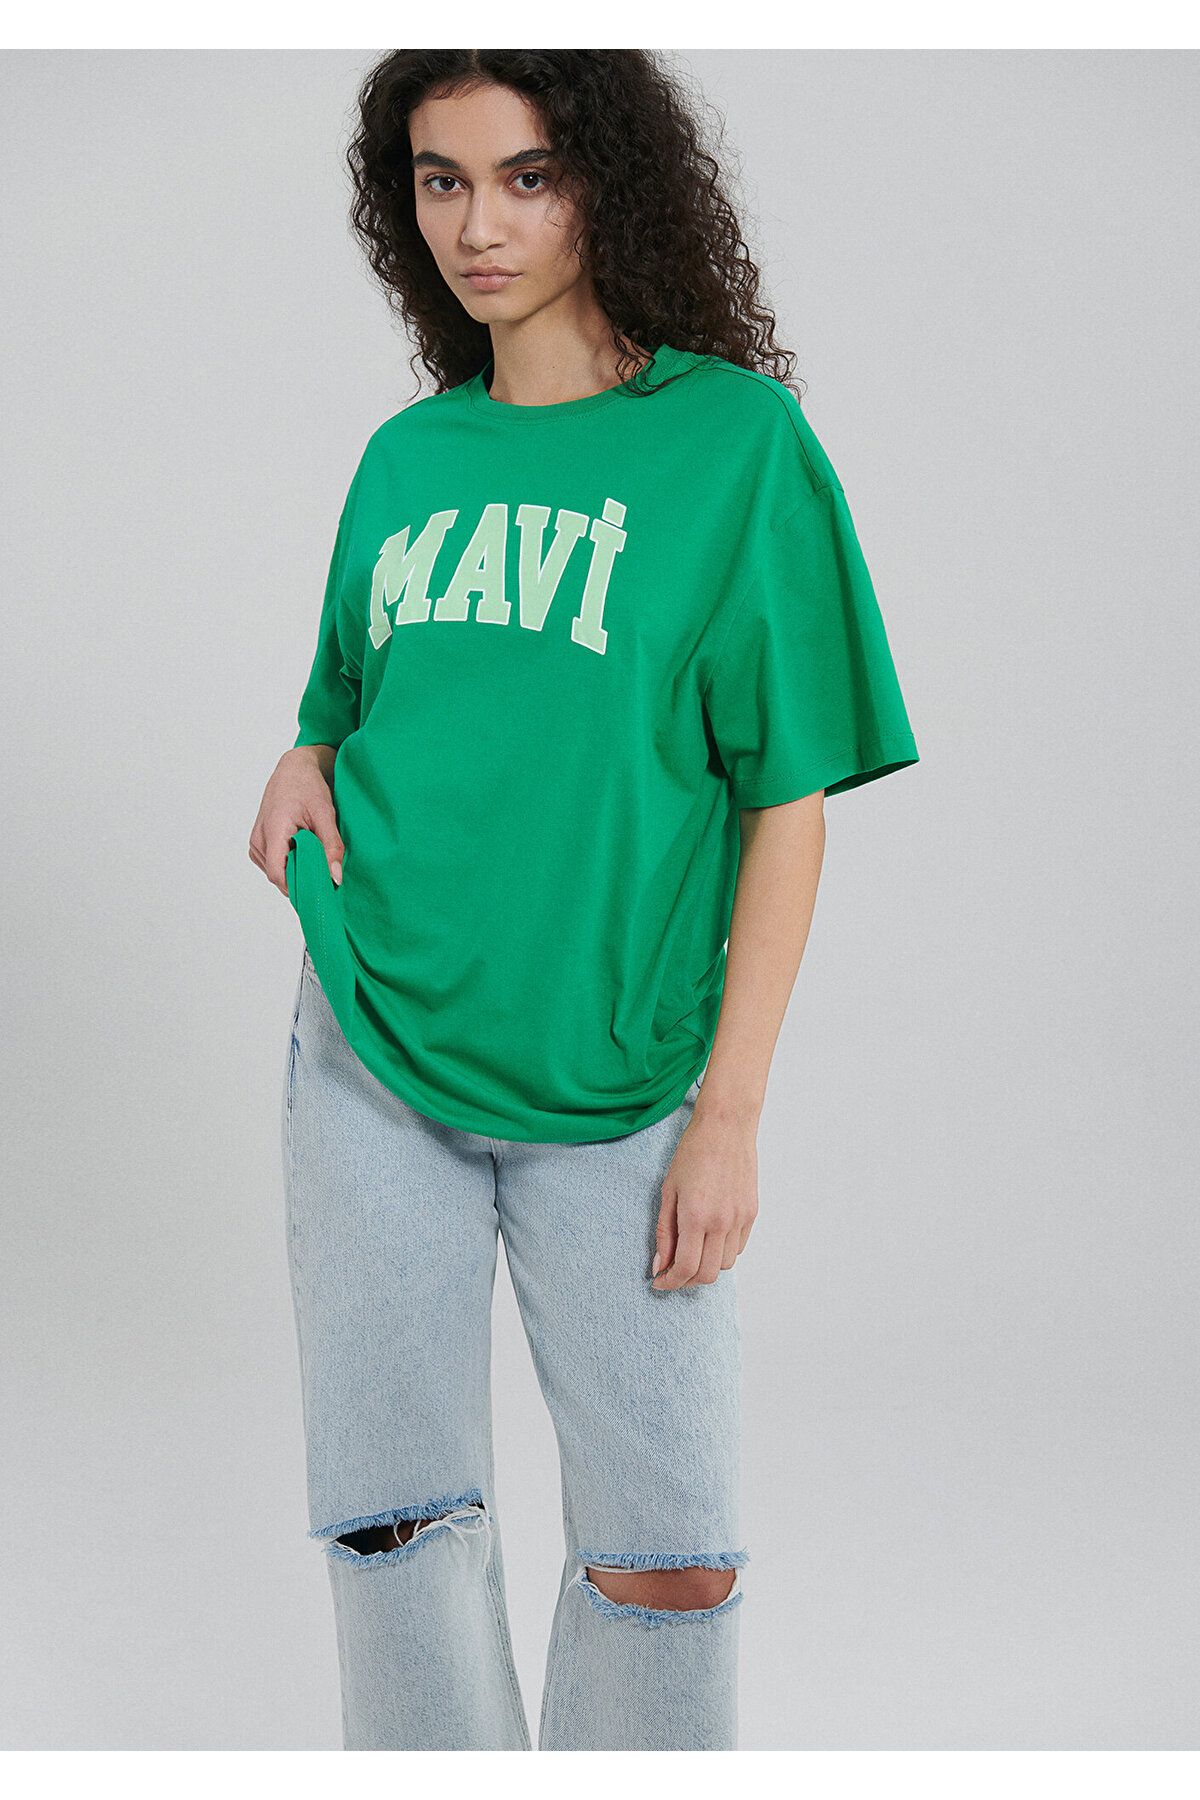 Mavi تی شرت سبز چاپی آرم بزرگ / بخش 1600843-71704